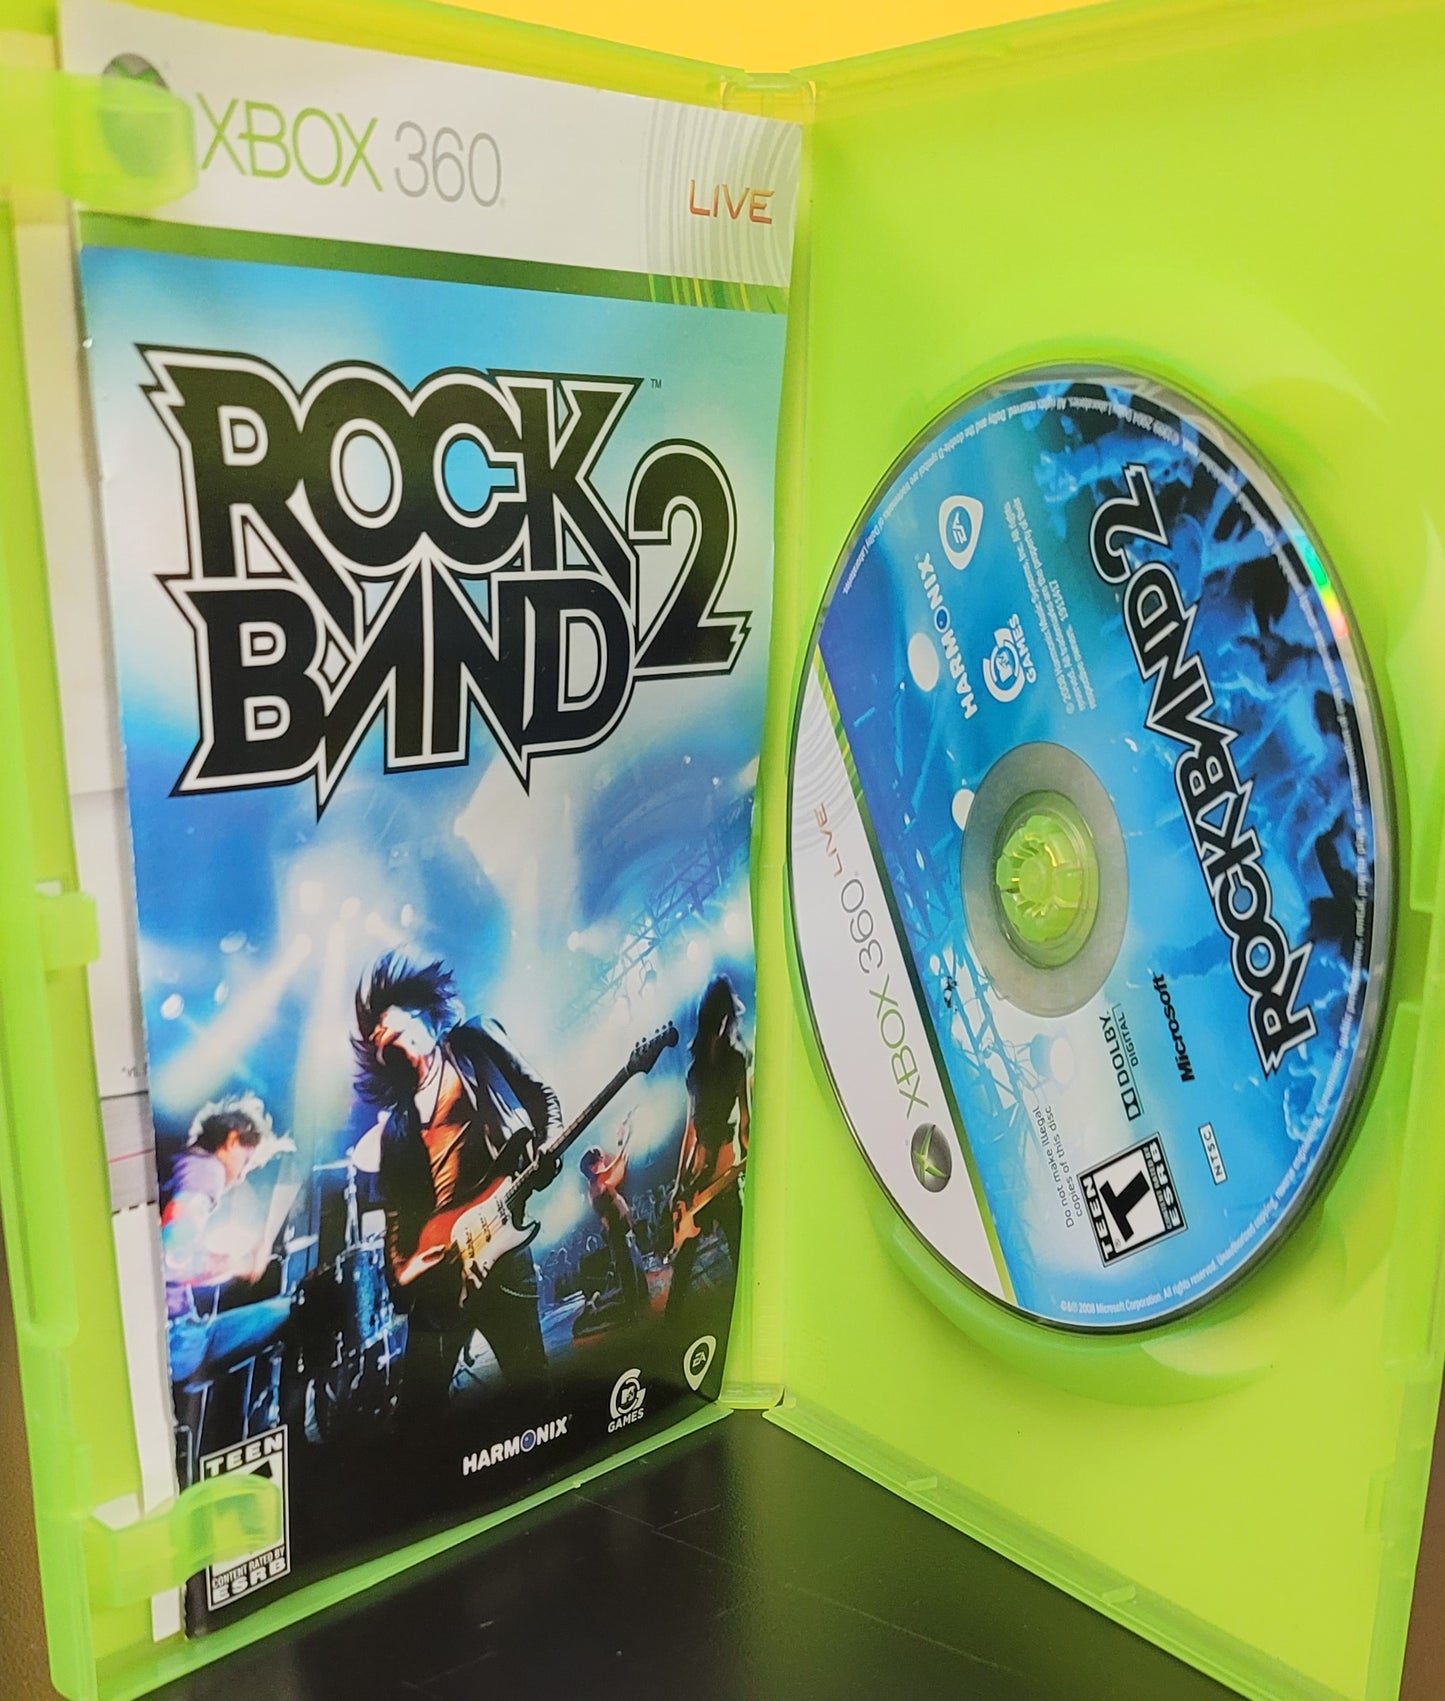 Rockband 2 - Xb360 - Used